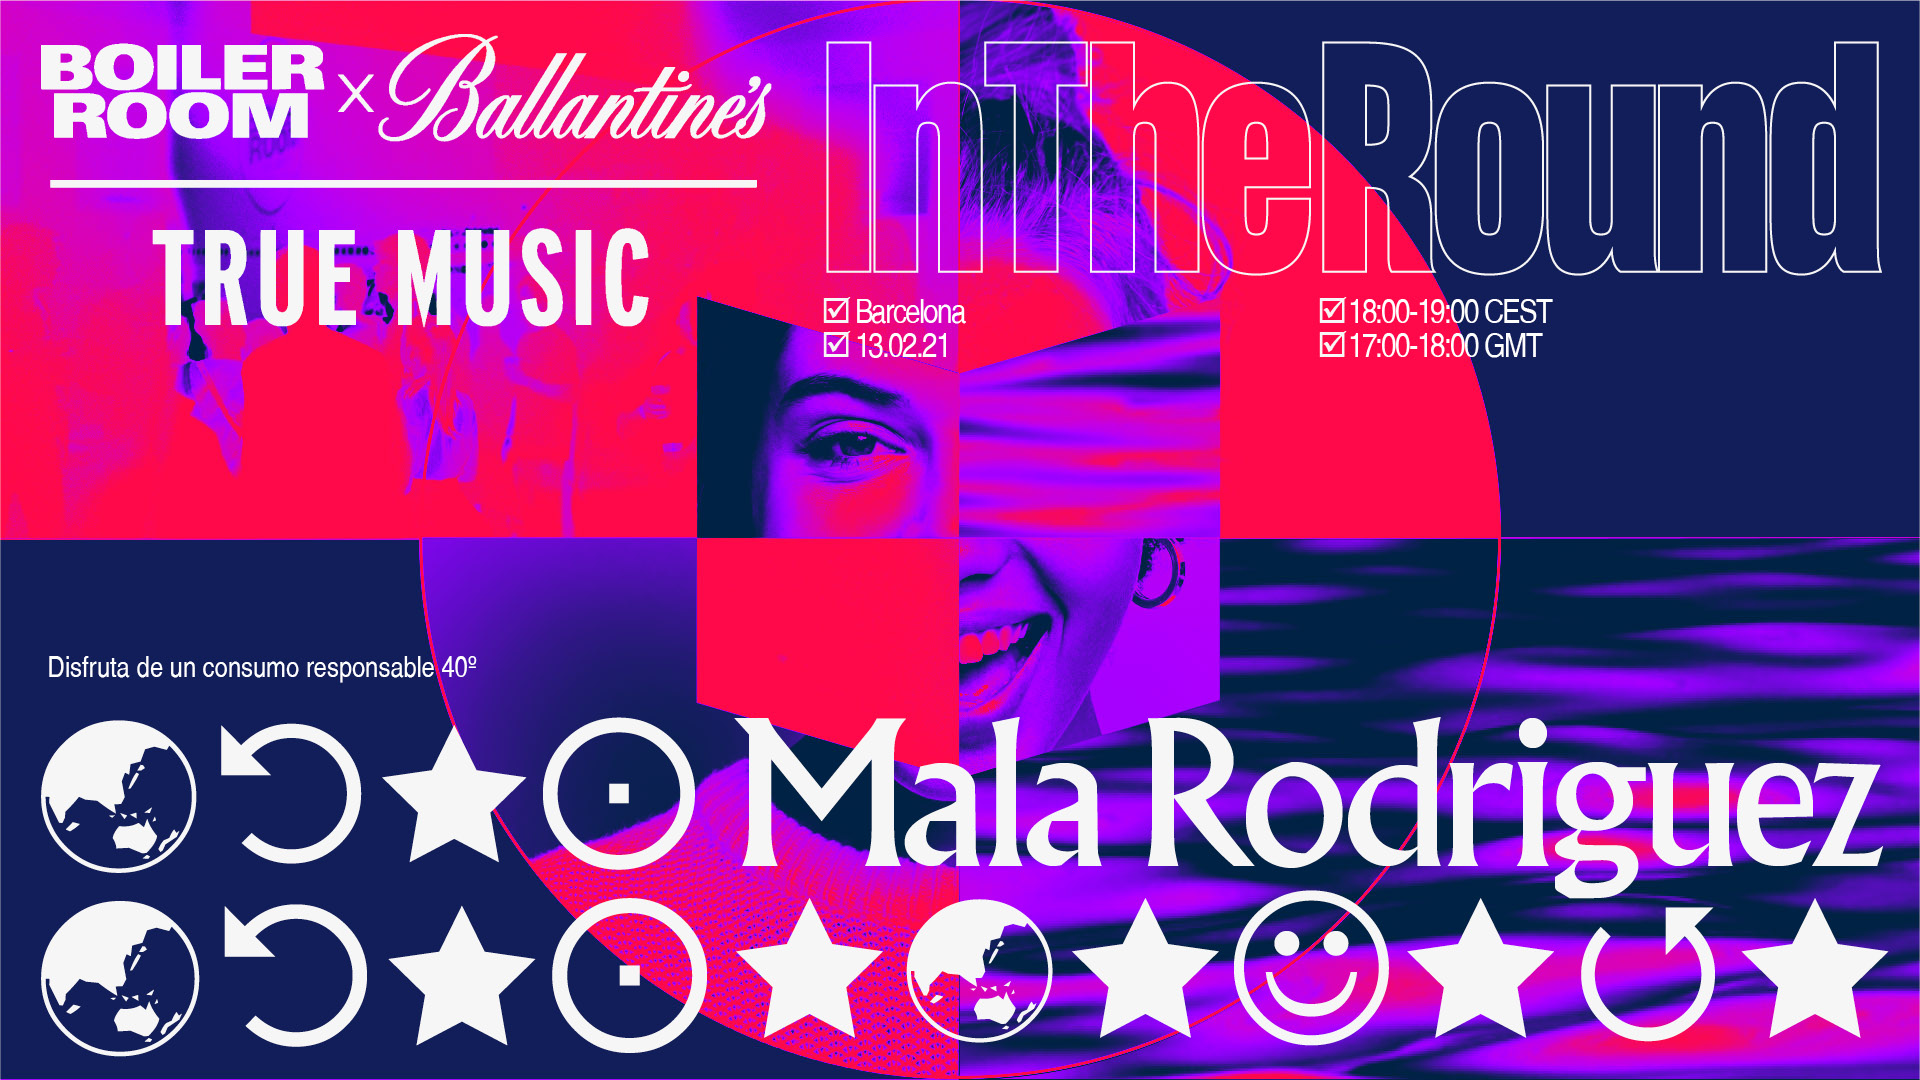 MALA RODRÍGUEZ ACTUA ESTE SABADO EN IN THE ROUND DE BOILER ROOM X BALLANTINE’S TRUE MUSIC